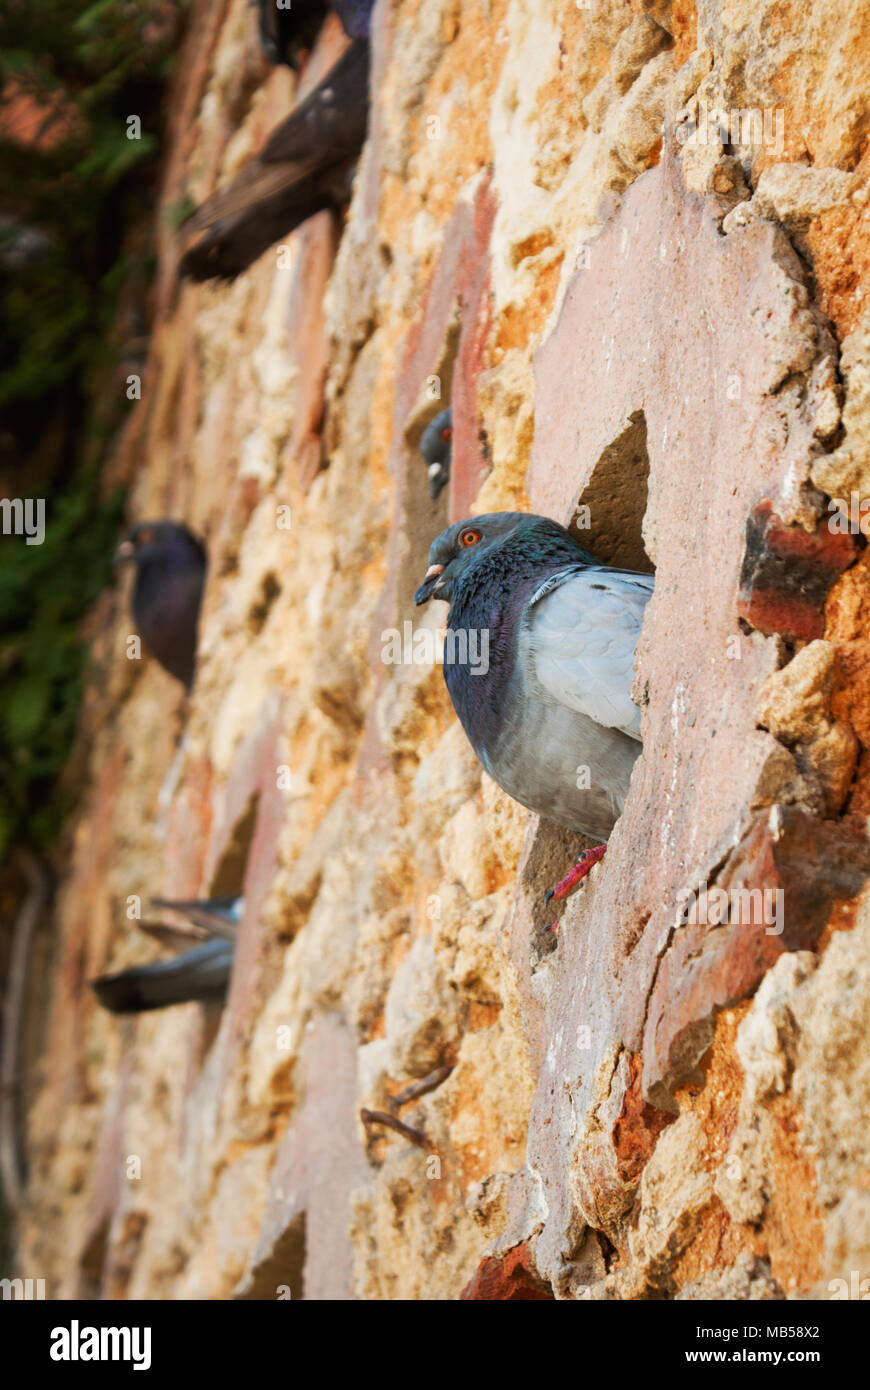 A pigeon inside a wall hole in Parque Las Palomas (San Juan, Puerto Rico) Stock Photo